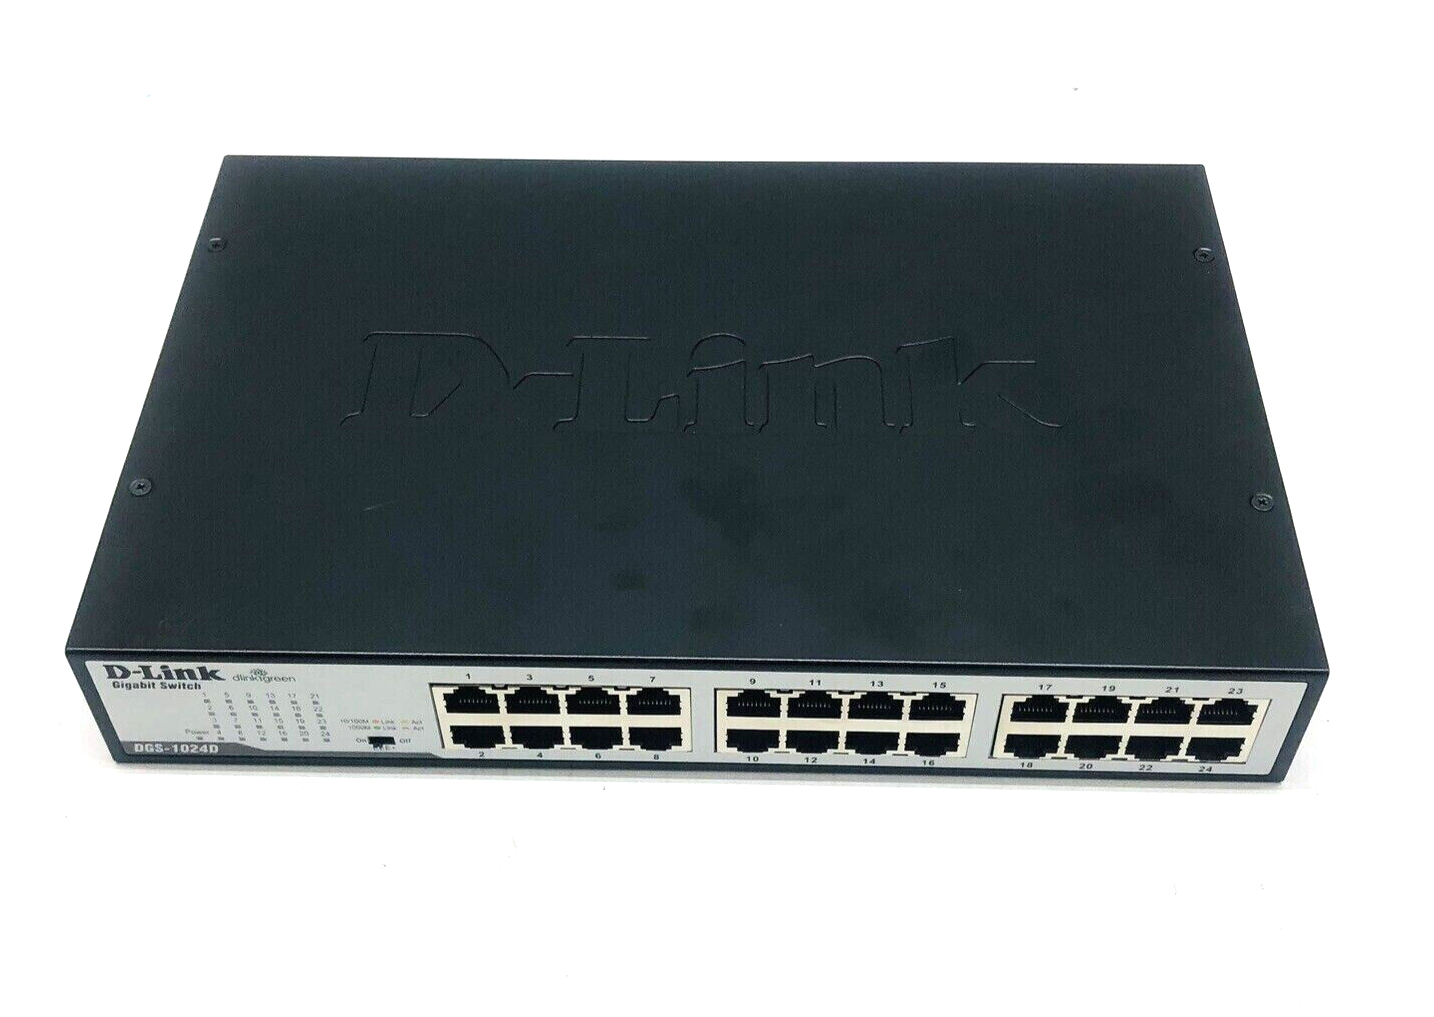 D-Link DGS-1024D 24-Port Gigabit Unmanaged Metal Desktop/Rackmount Switch w/GIFT - $37.94